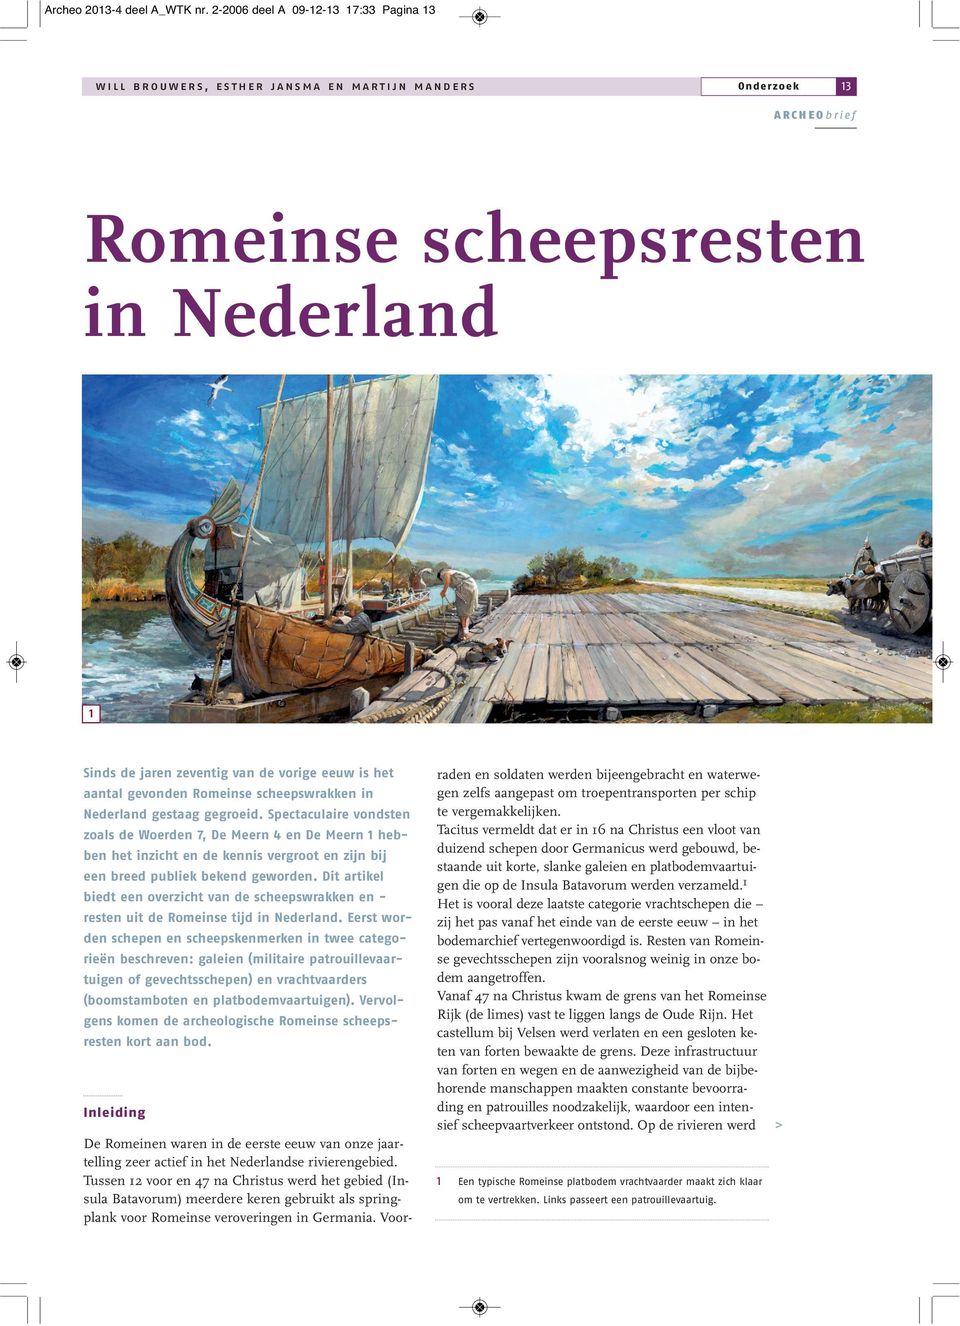 gevonden Romeinse scheepswrakken in Nederland gestaag gegroeid.